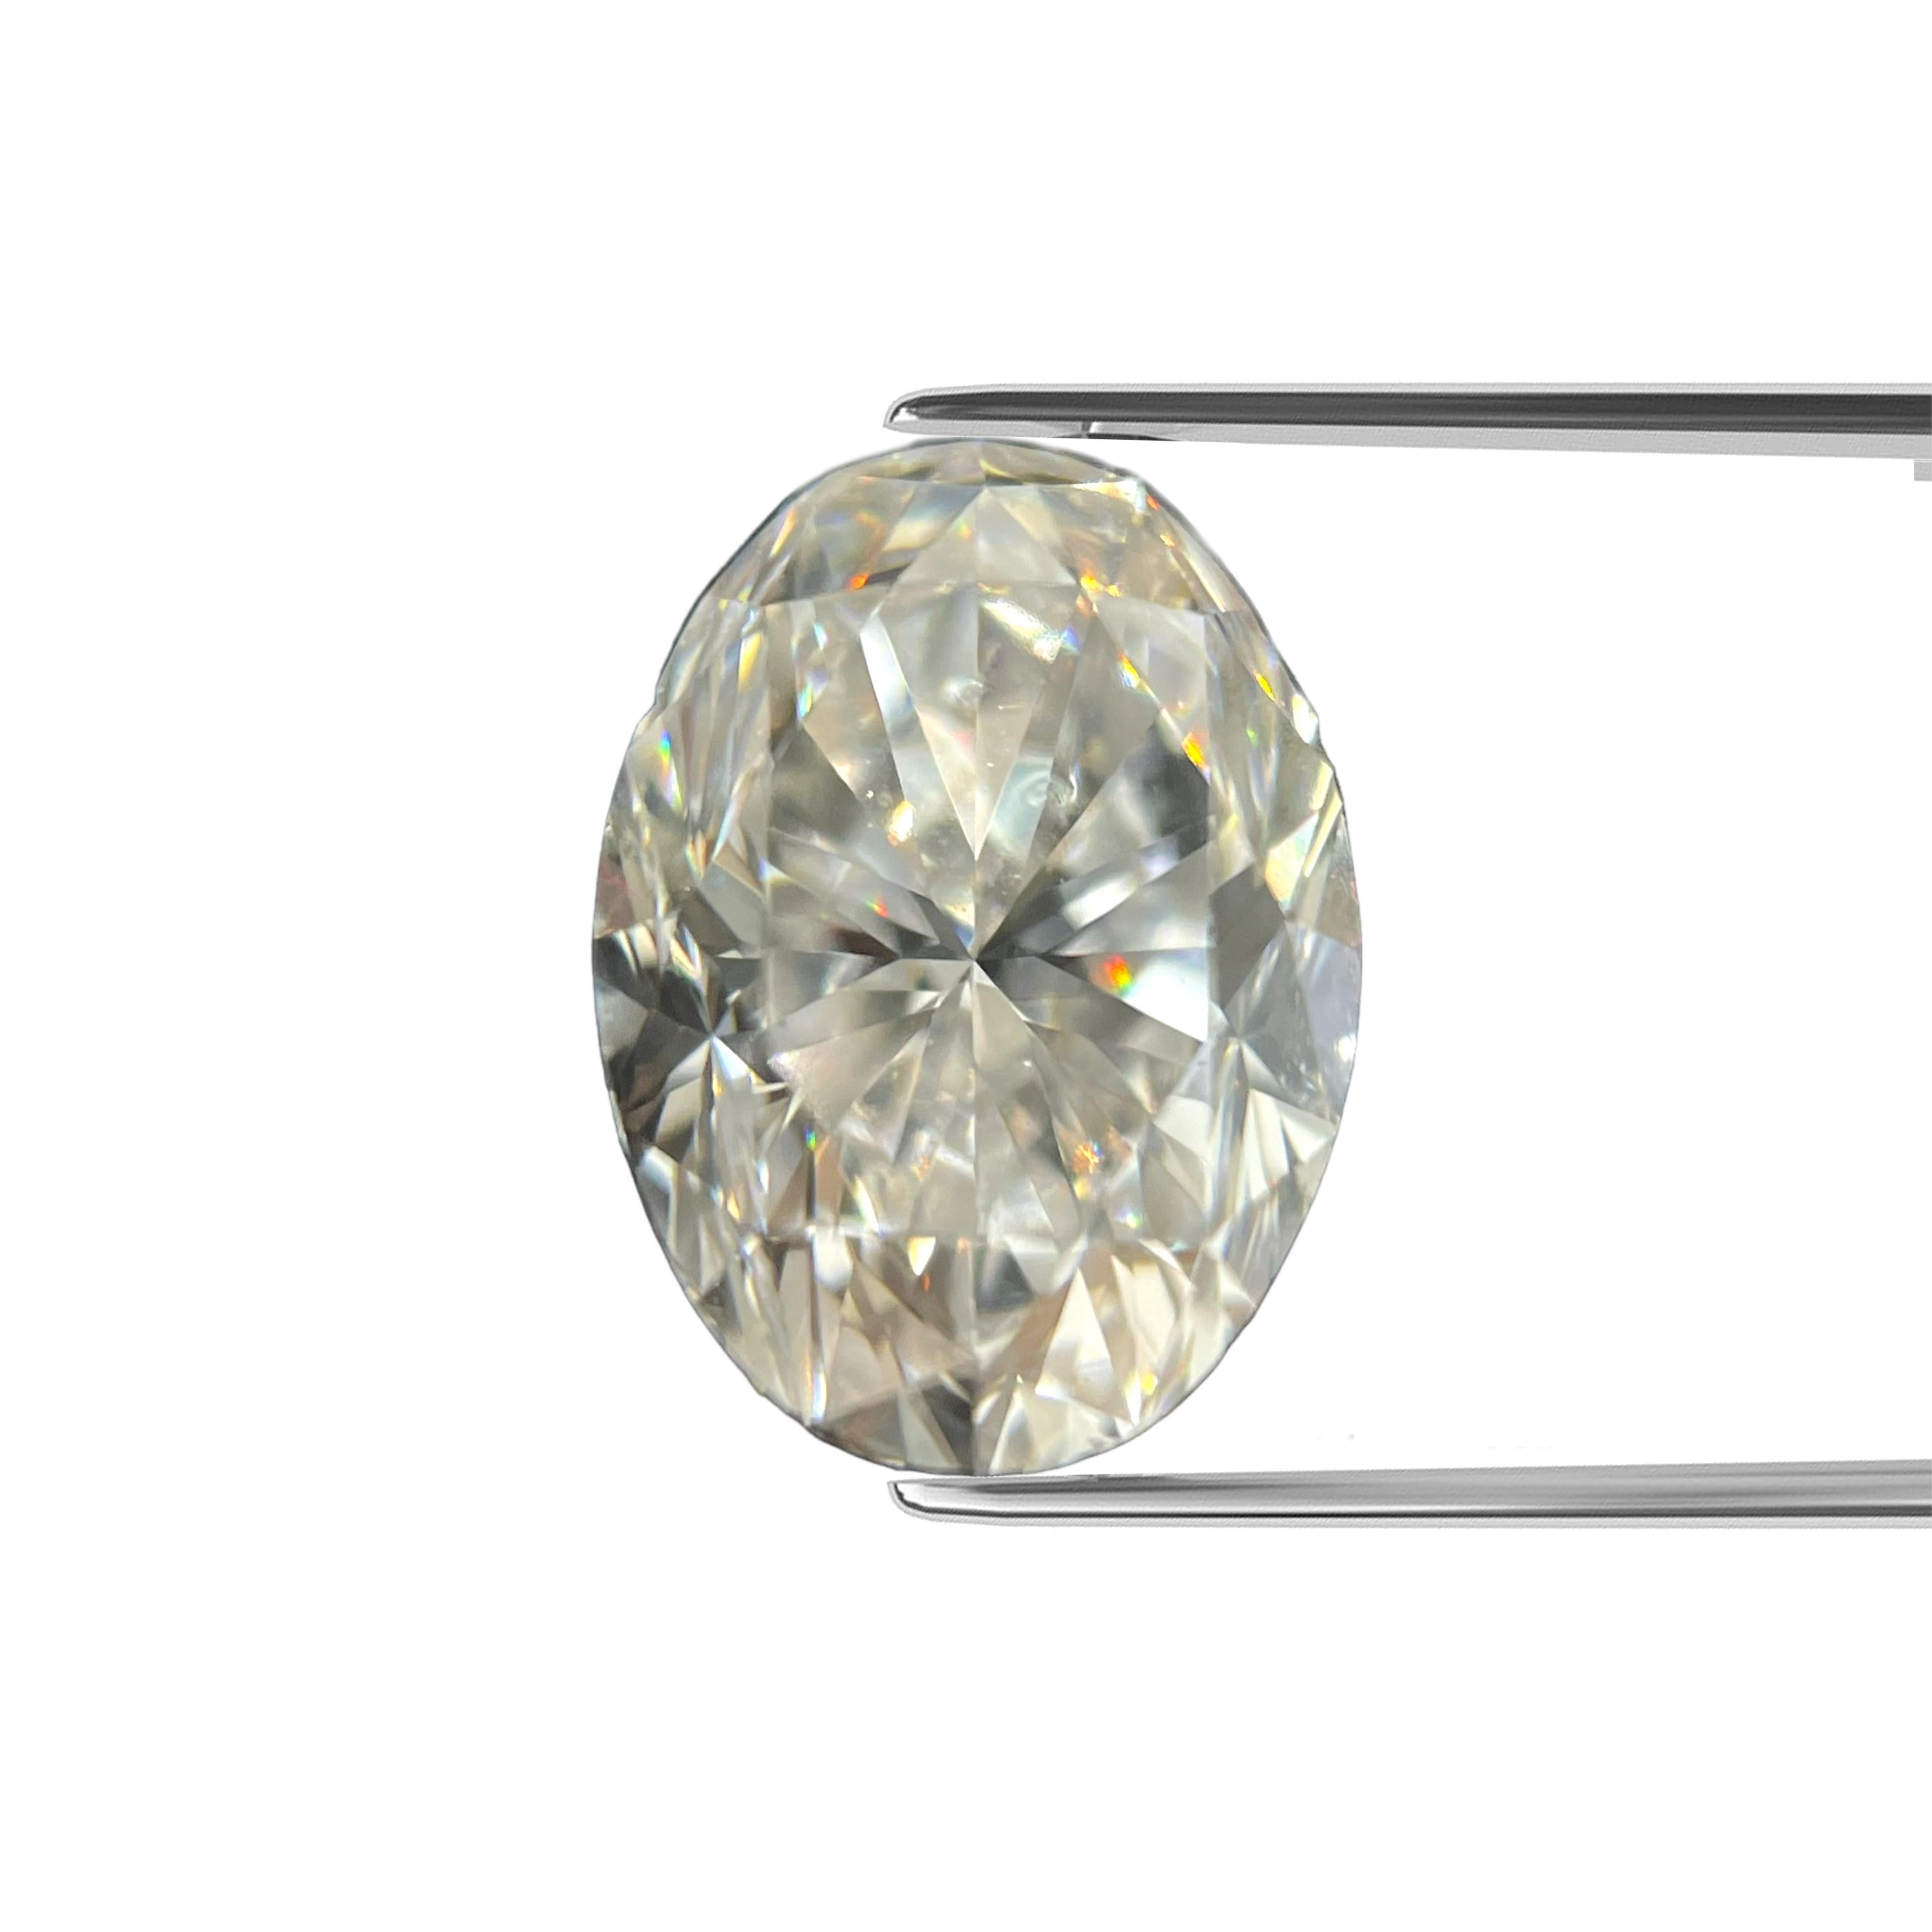 ITEM DESCRIPTION

ID #: NYC56500
Stone Shape: OVAL MODIFIED BRILLIANT 
Diamond Weight: 0.90ct
Clarity: VS2
Color: D
Cut:	Excellent
Measurements: 6.99 x 5.13 x 3.58 mm
Depth %:	69.9%
Table %:	57%
Symmetry: Very Good
Polish: Excellent
Fluorescence: